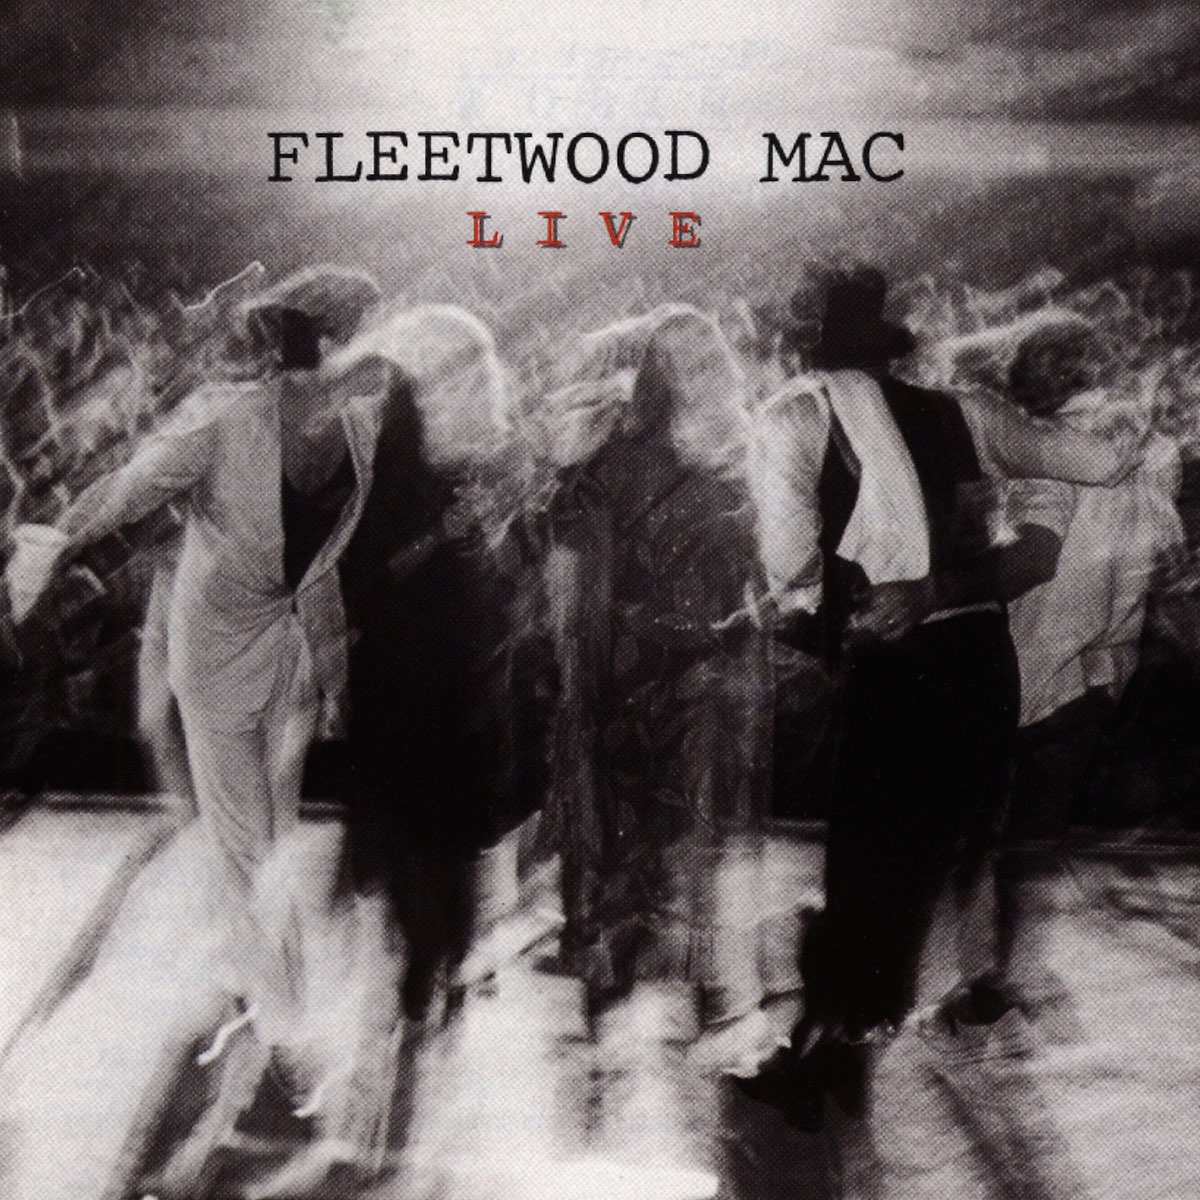 ‎Fleetwood Mac Live by Fleetwood Mac on Apple Music